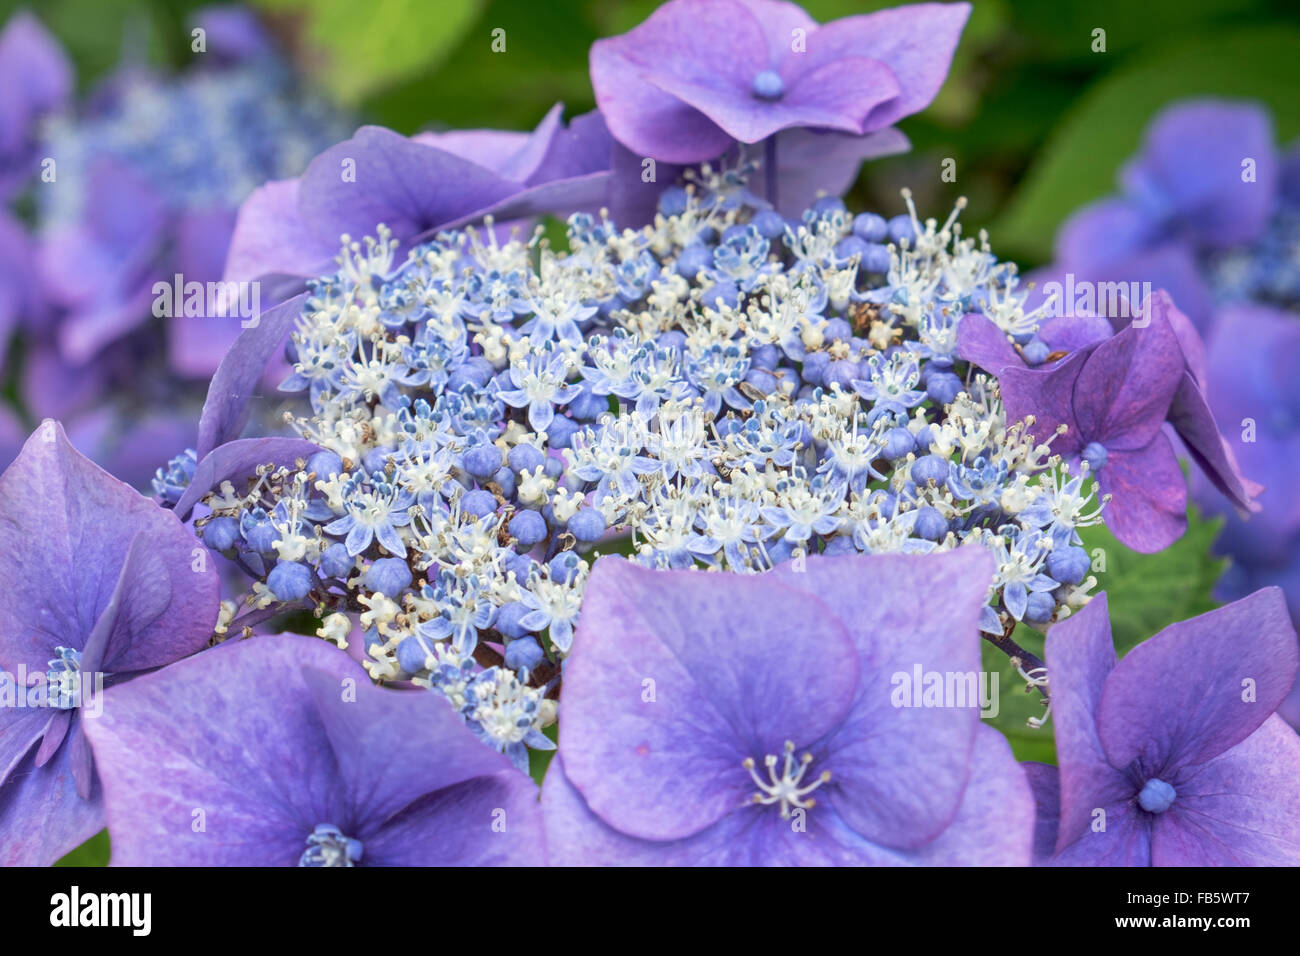 Flowerhead of Hydrangea plant Stock Photo